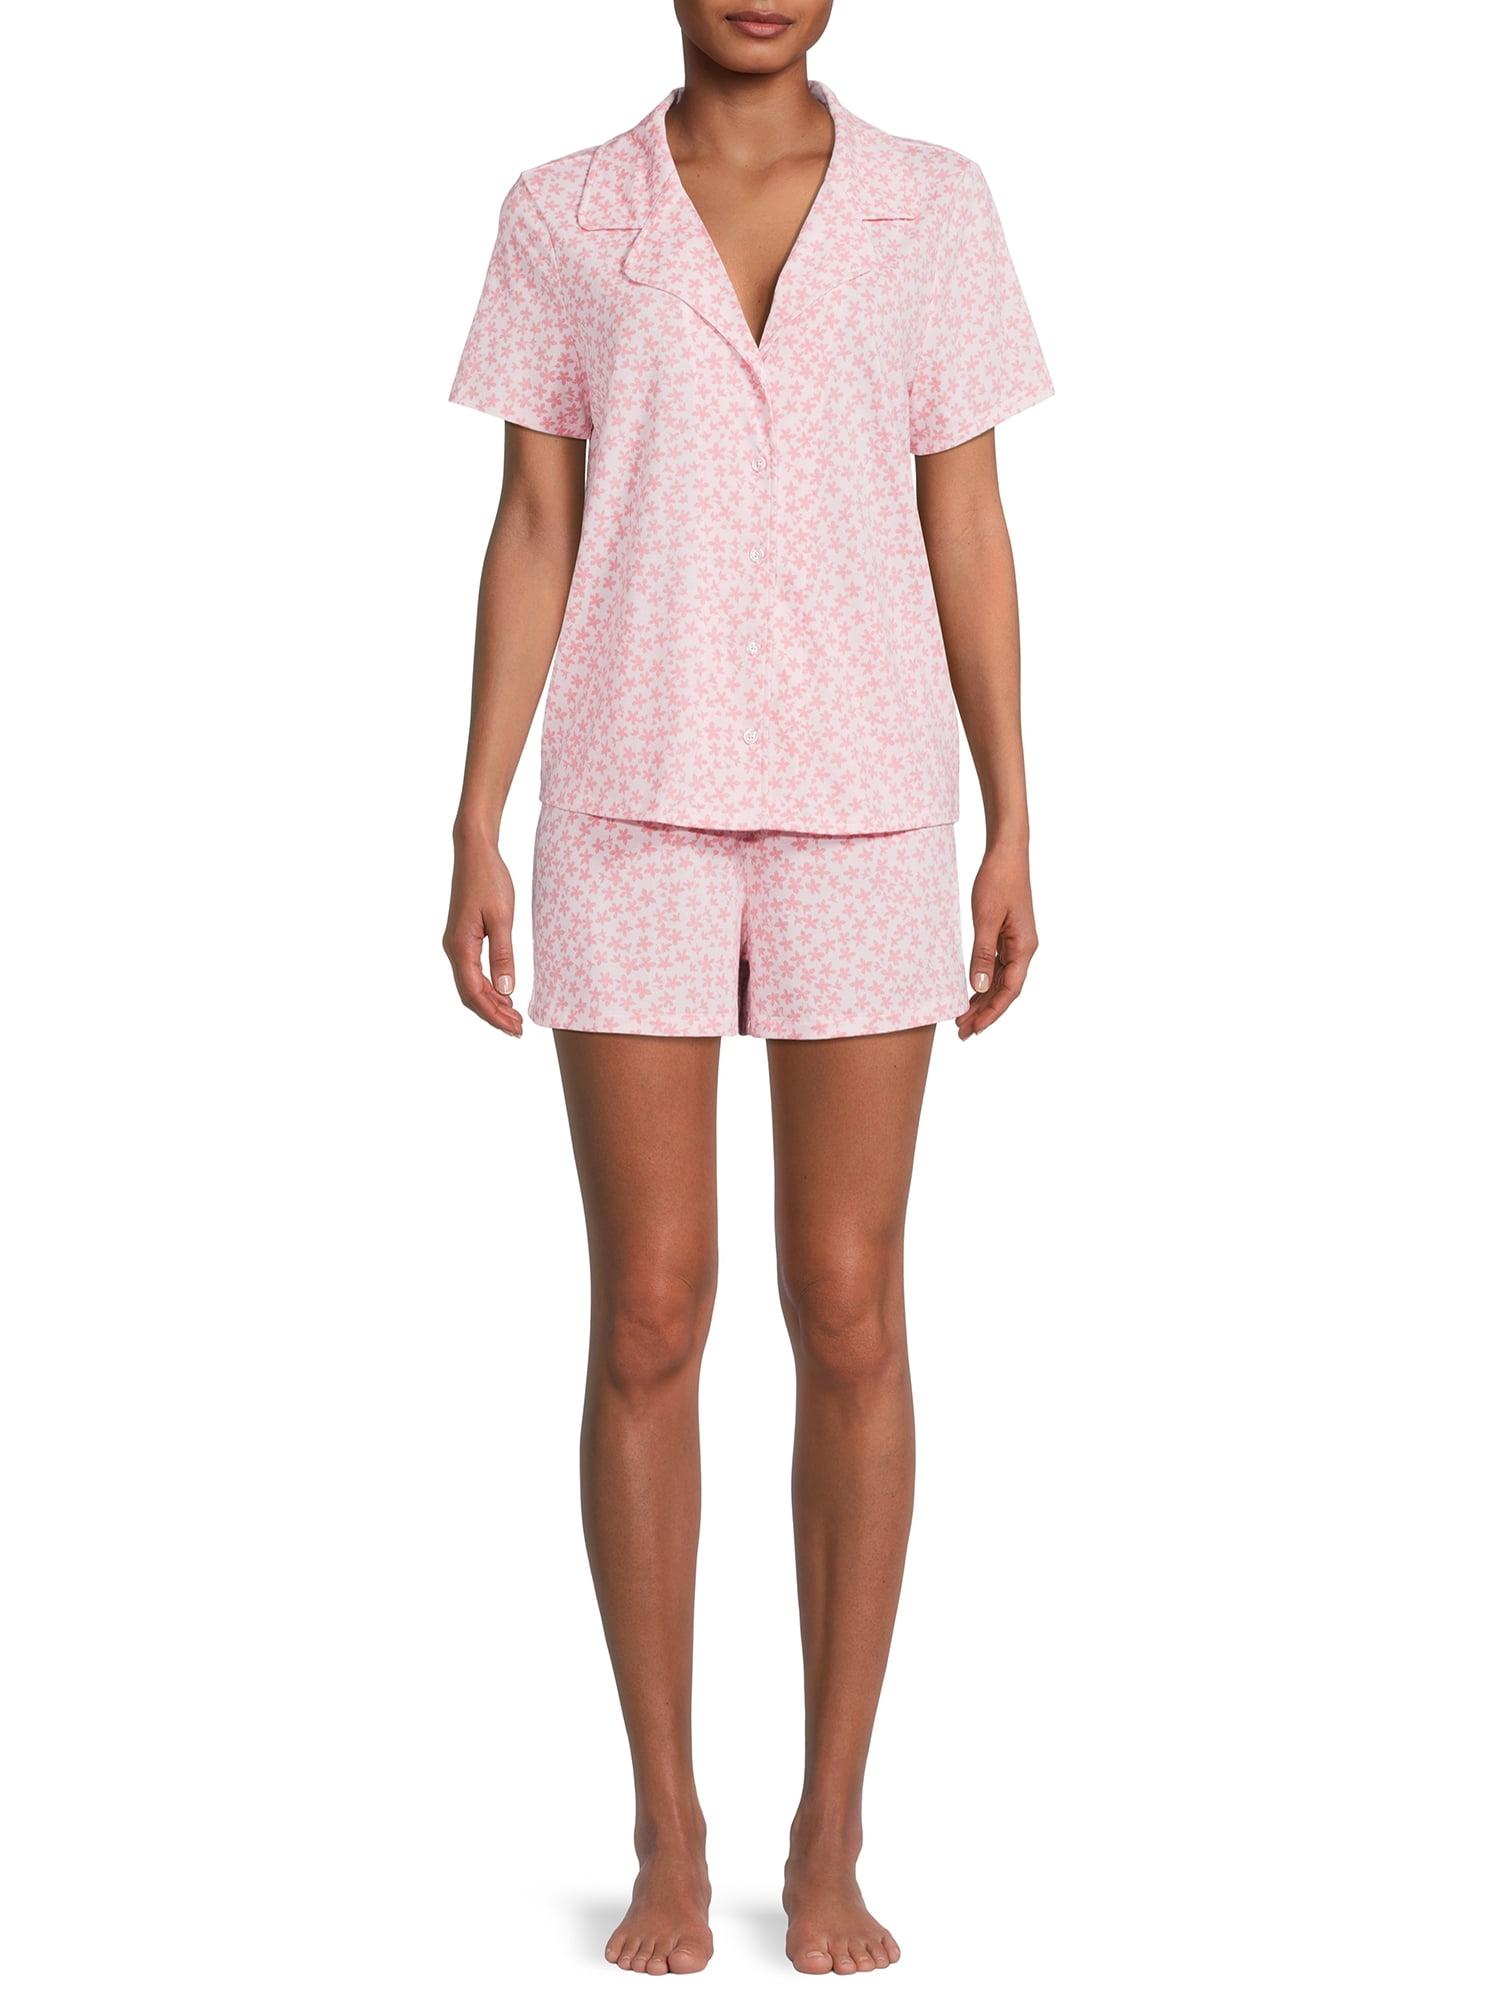 Como Blu Women's Short Sleeve Top and Shorts Pajama Set, 2-Piece